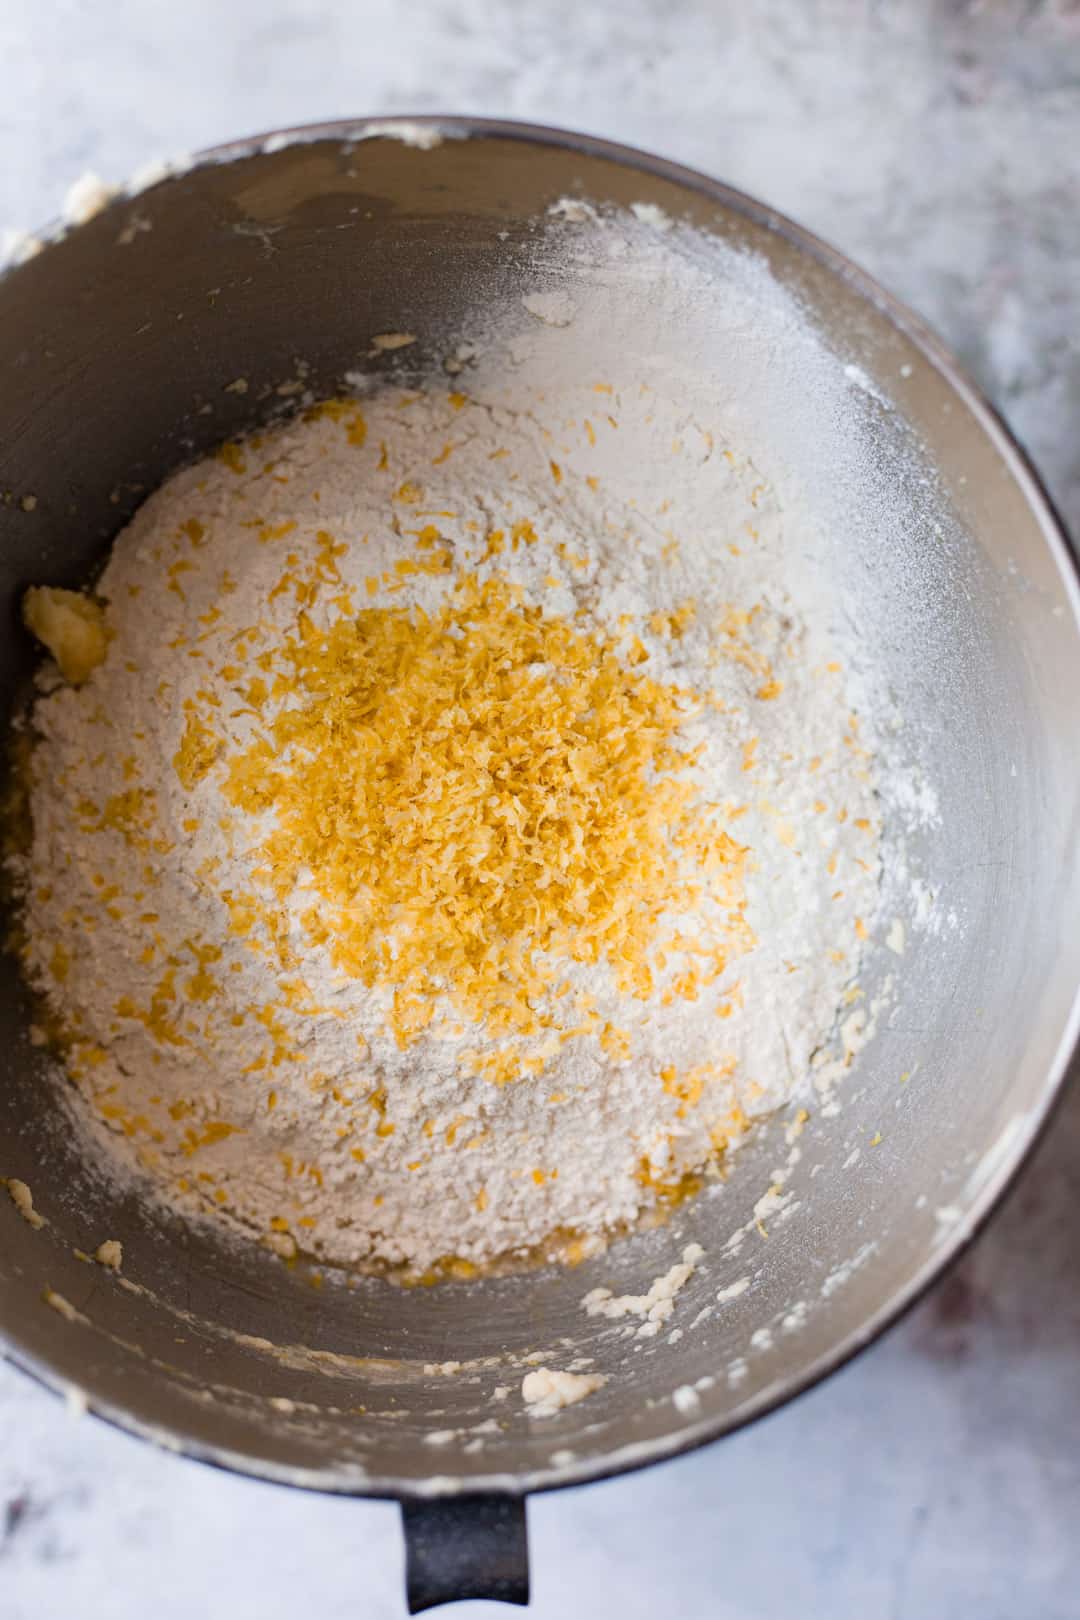 Lemon zest being mixed into cake batter.